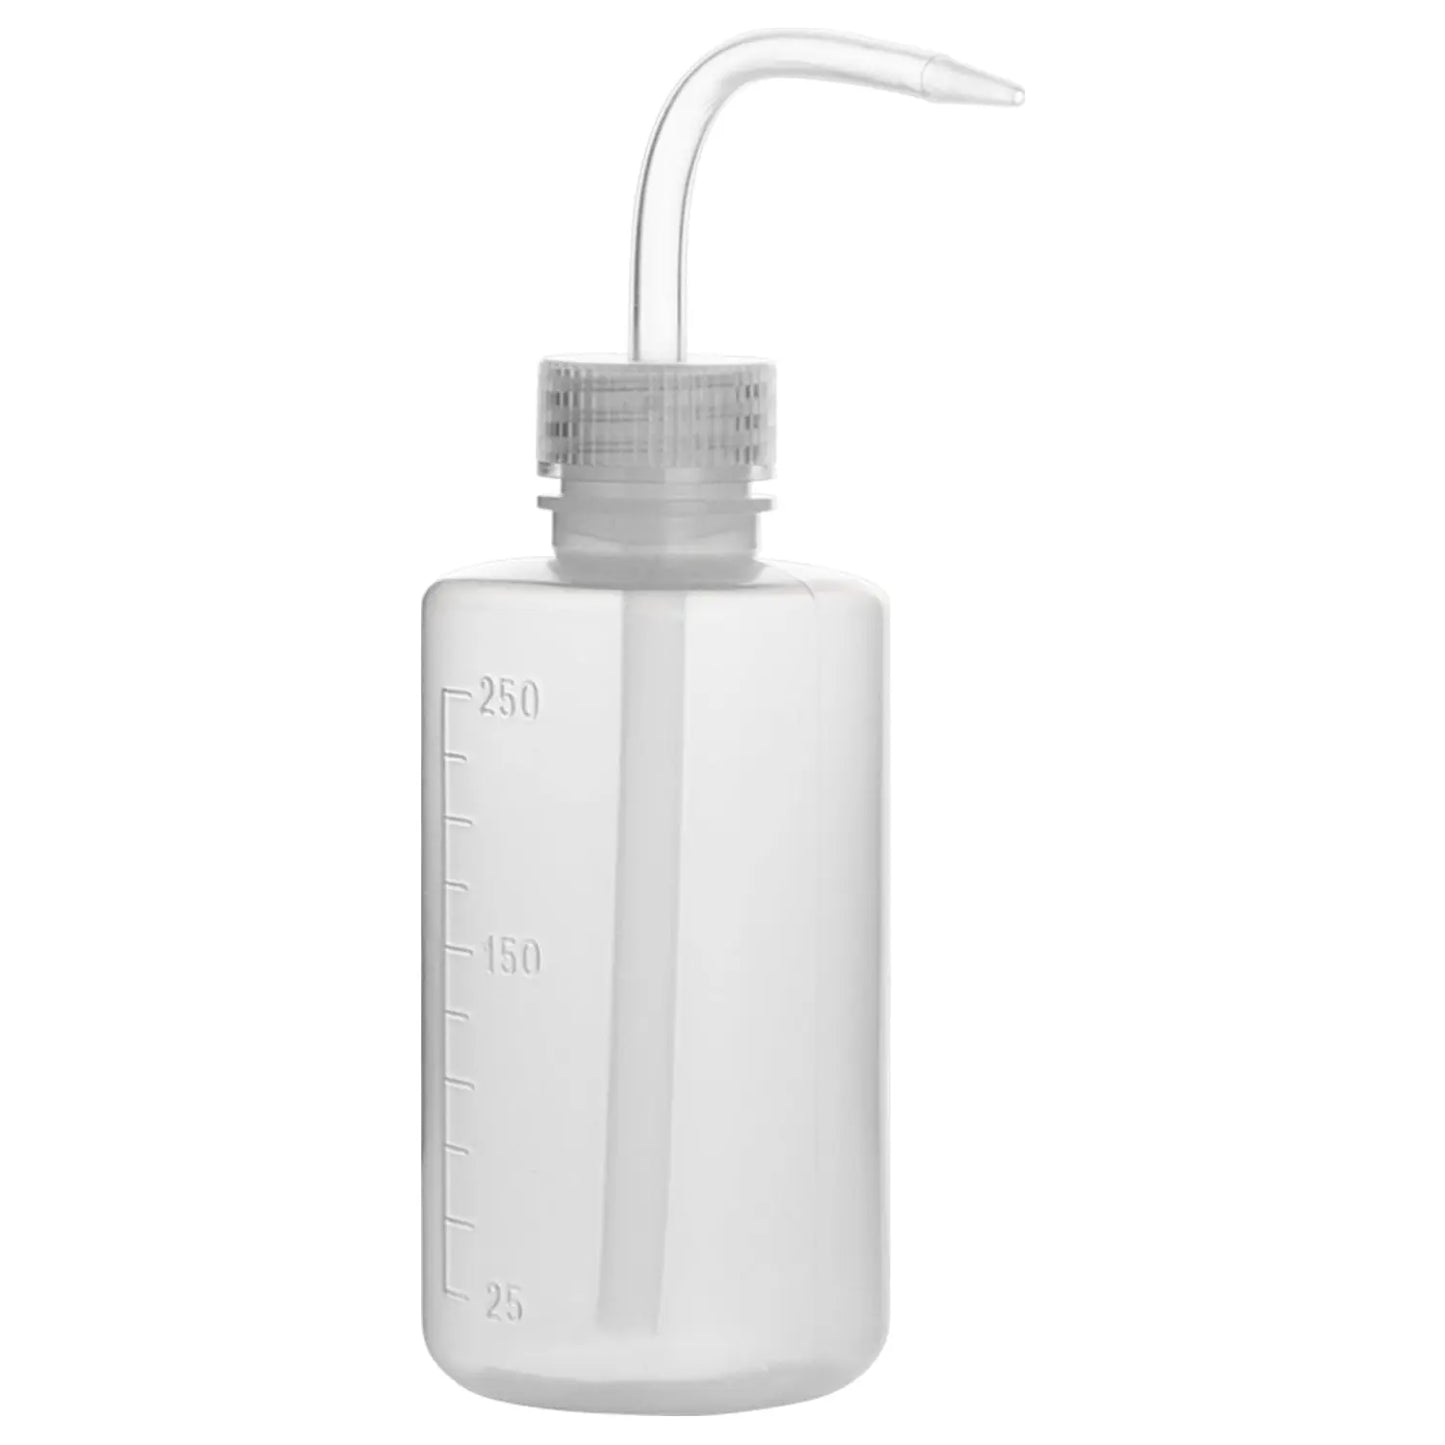 Plastic Squeeze Wash Bottle, 1-Pack to  6-Pack - StonyLab Wash Bottles 250-ml-1